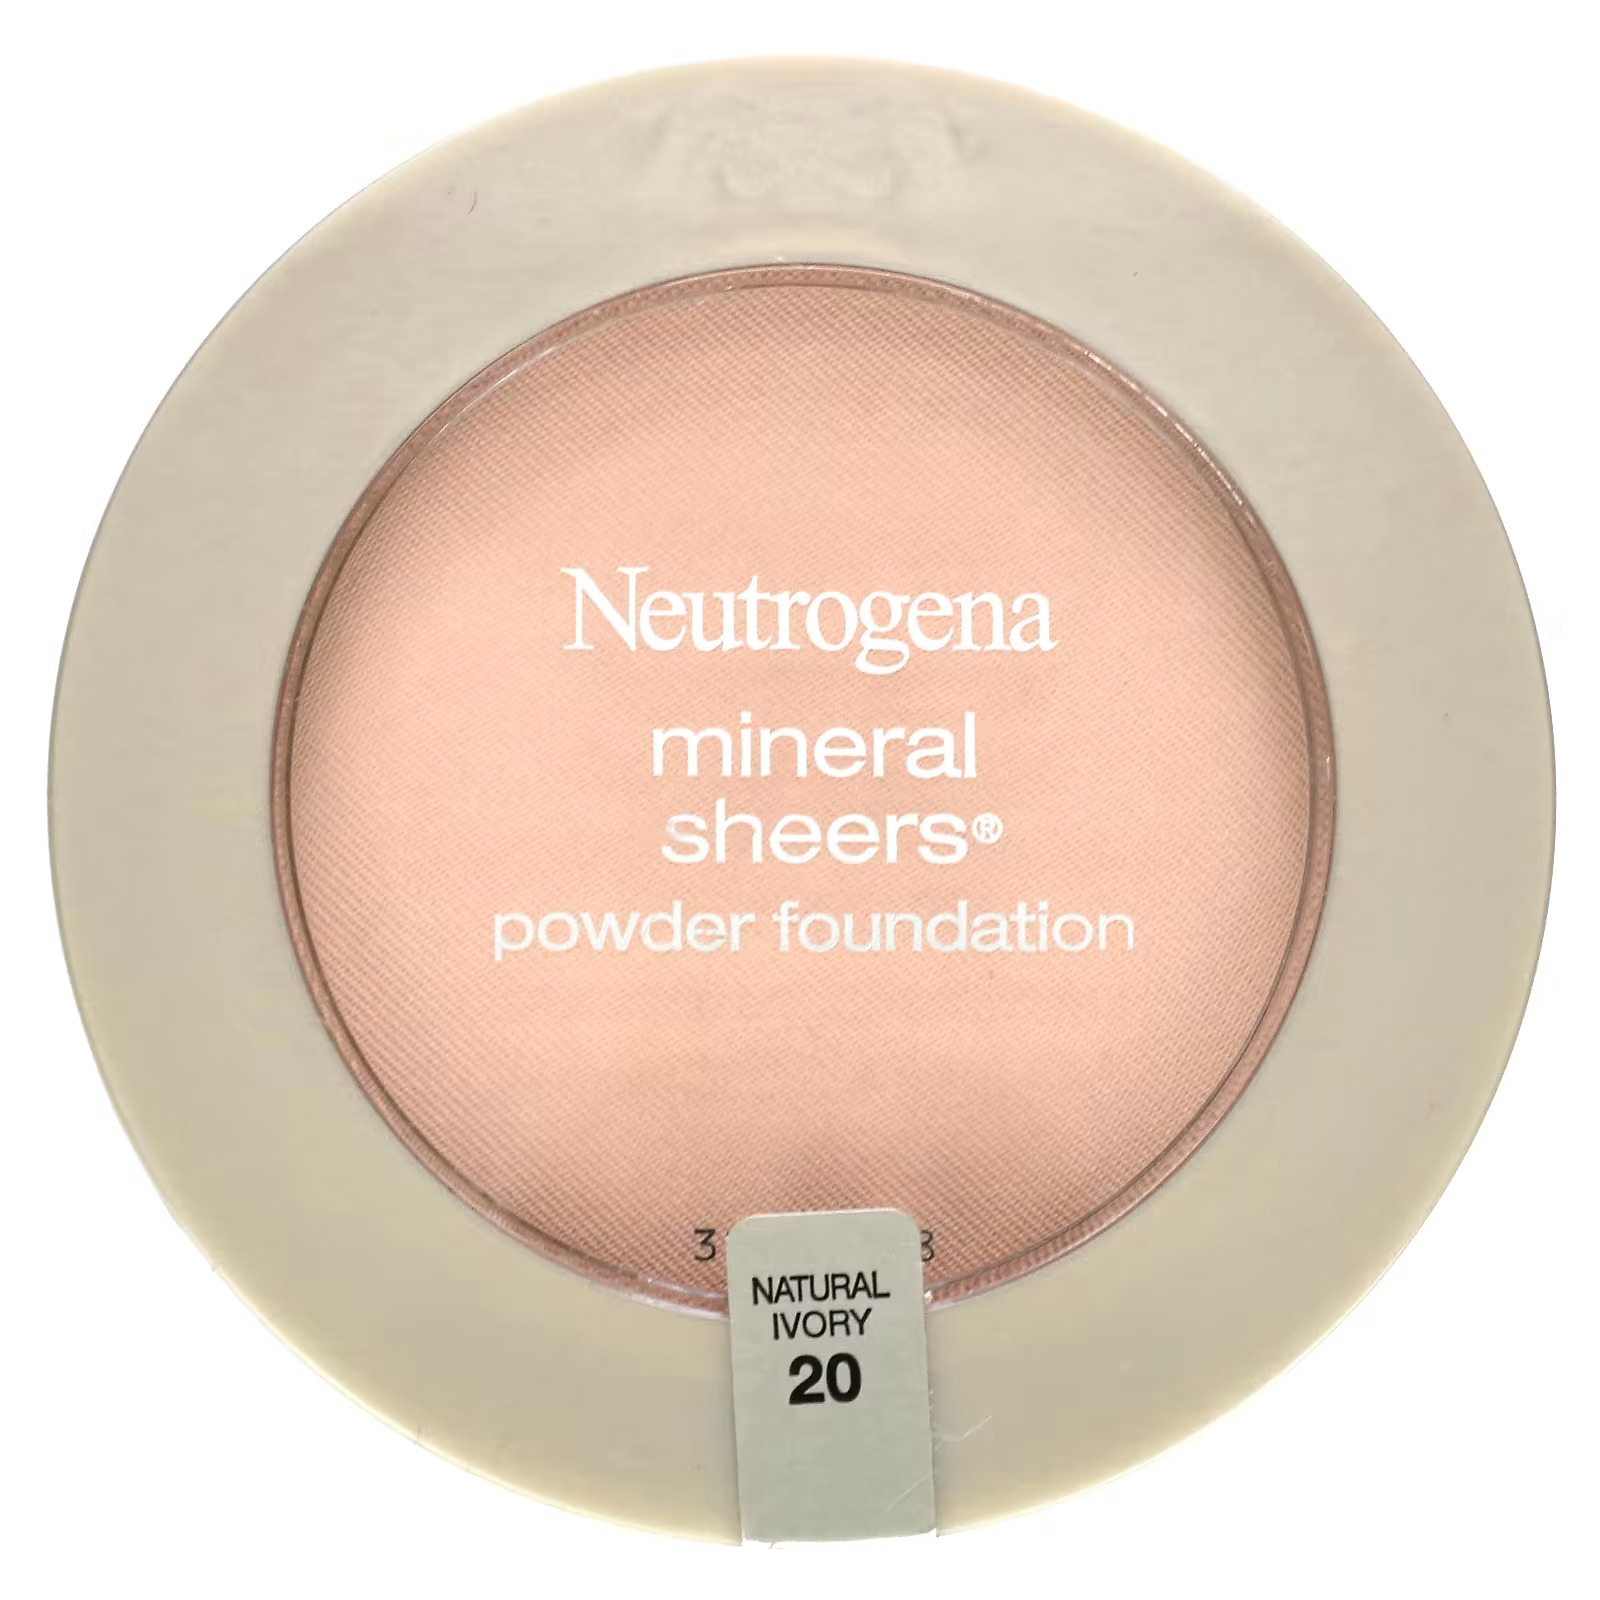 Neutrogena Mineral Sheers Powder Foundation Natural Ivory 20 0,34 унции (9,6 г) neutrogena mineral sheers тональная пудра оттенок nude 40 9 6 г 0 34 унции